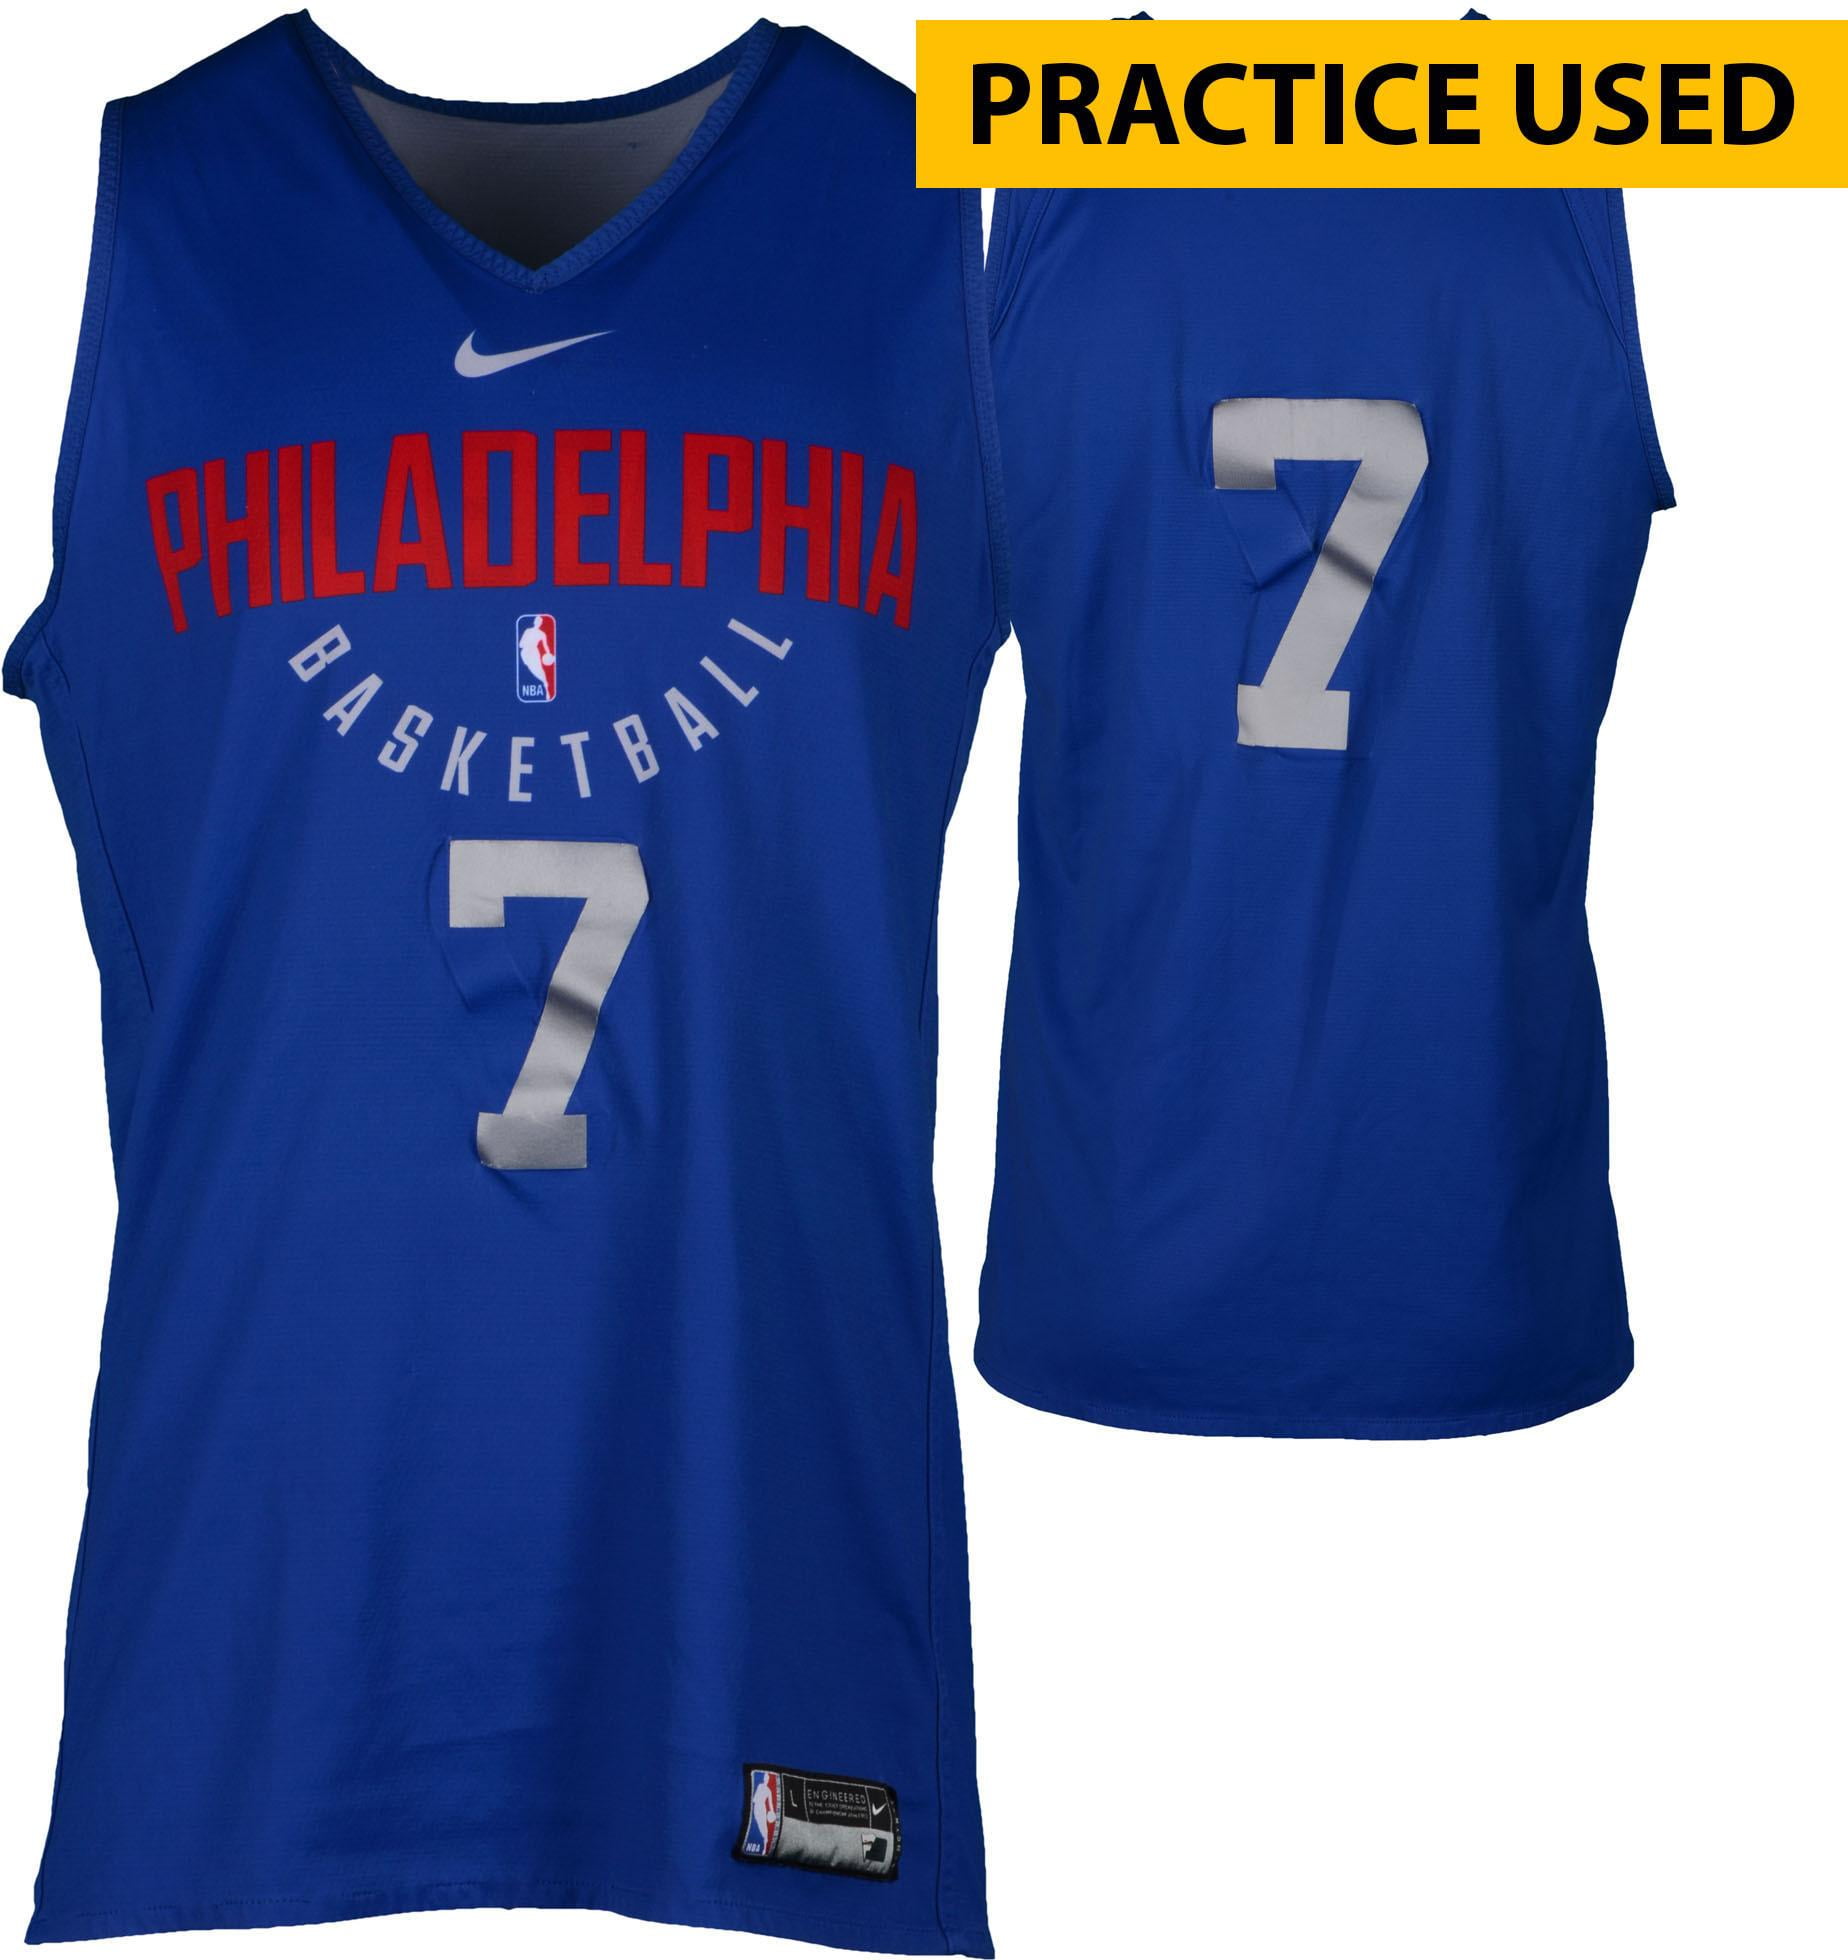 timothe luwawu-cabarrot philadelphia 76ers jerseys